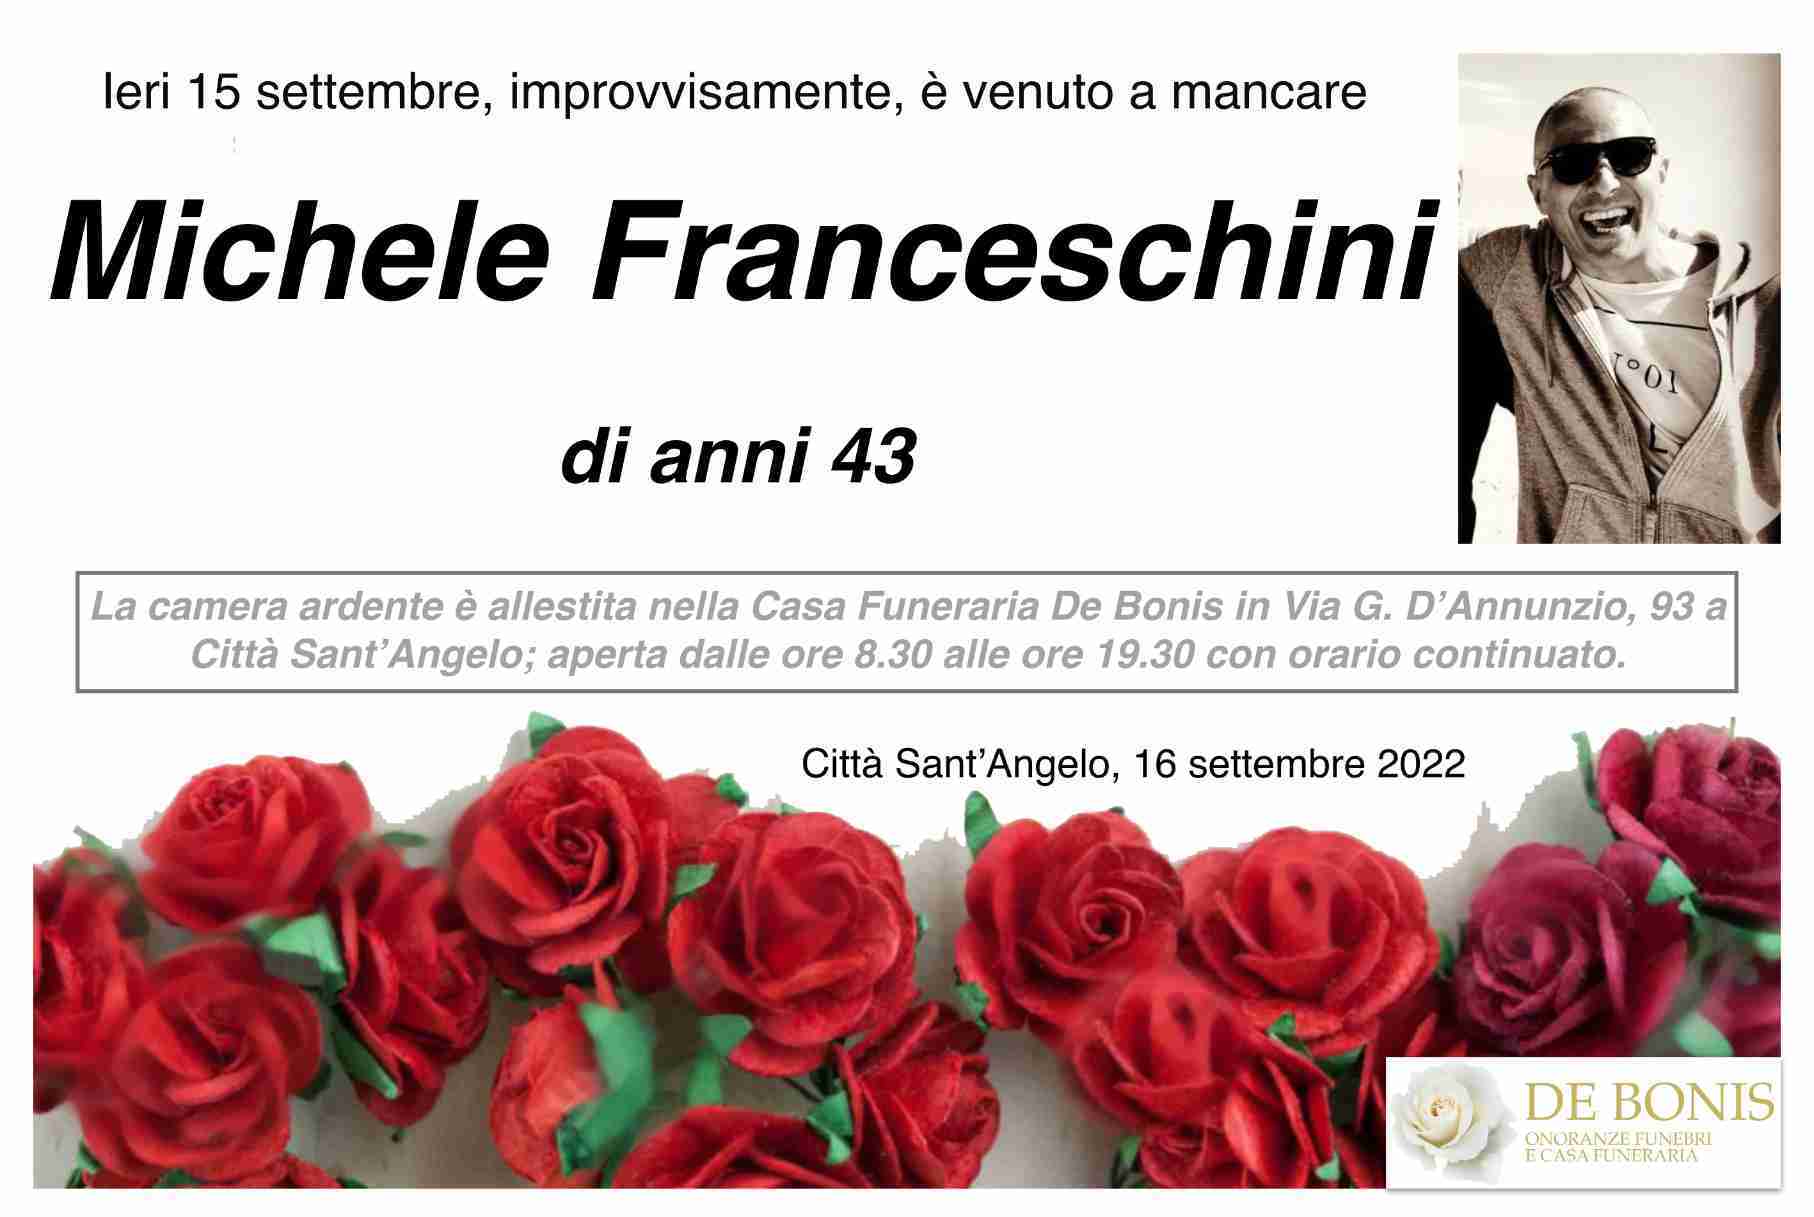 Michele Franceschini